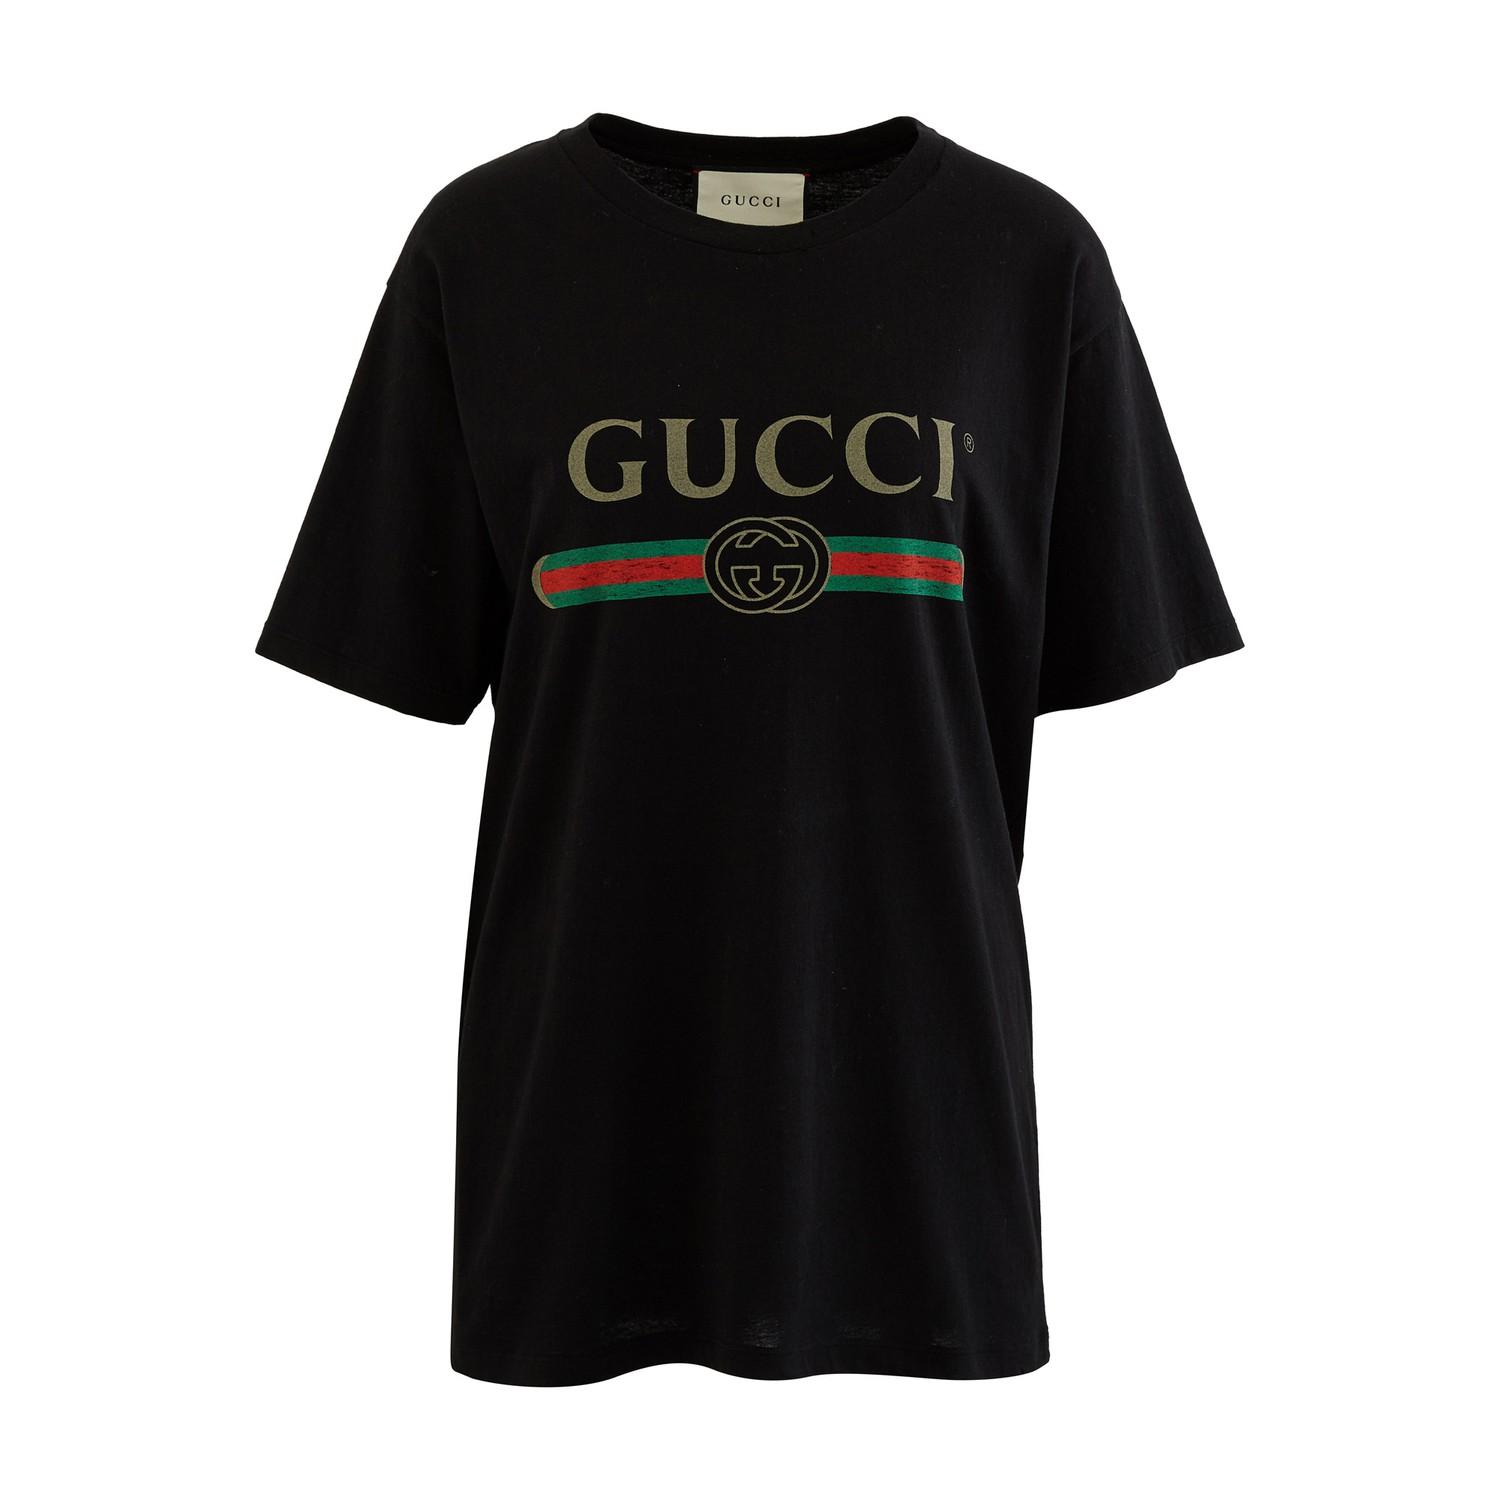 Bedelen Verdorie overstroming Gucci Oversized Logo T-shirt in Black | Lyst